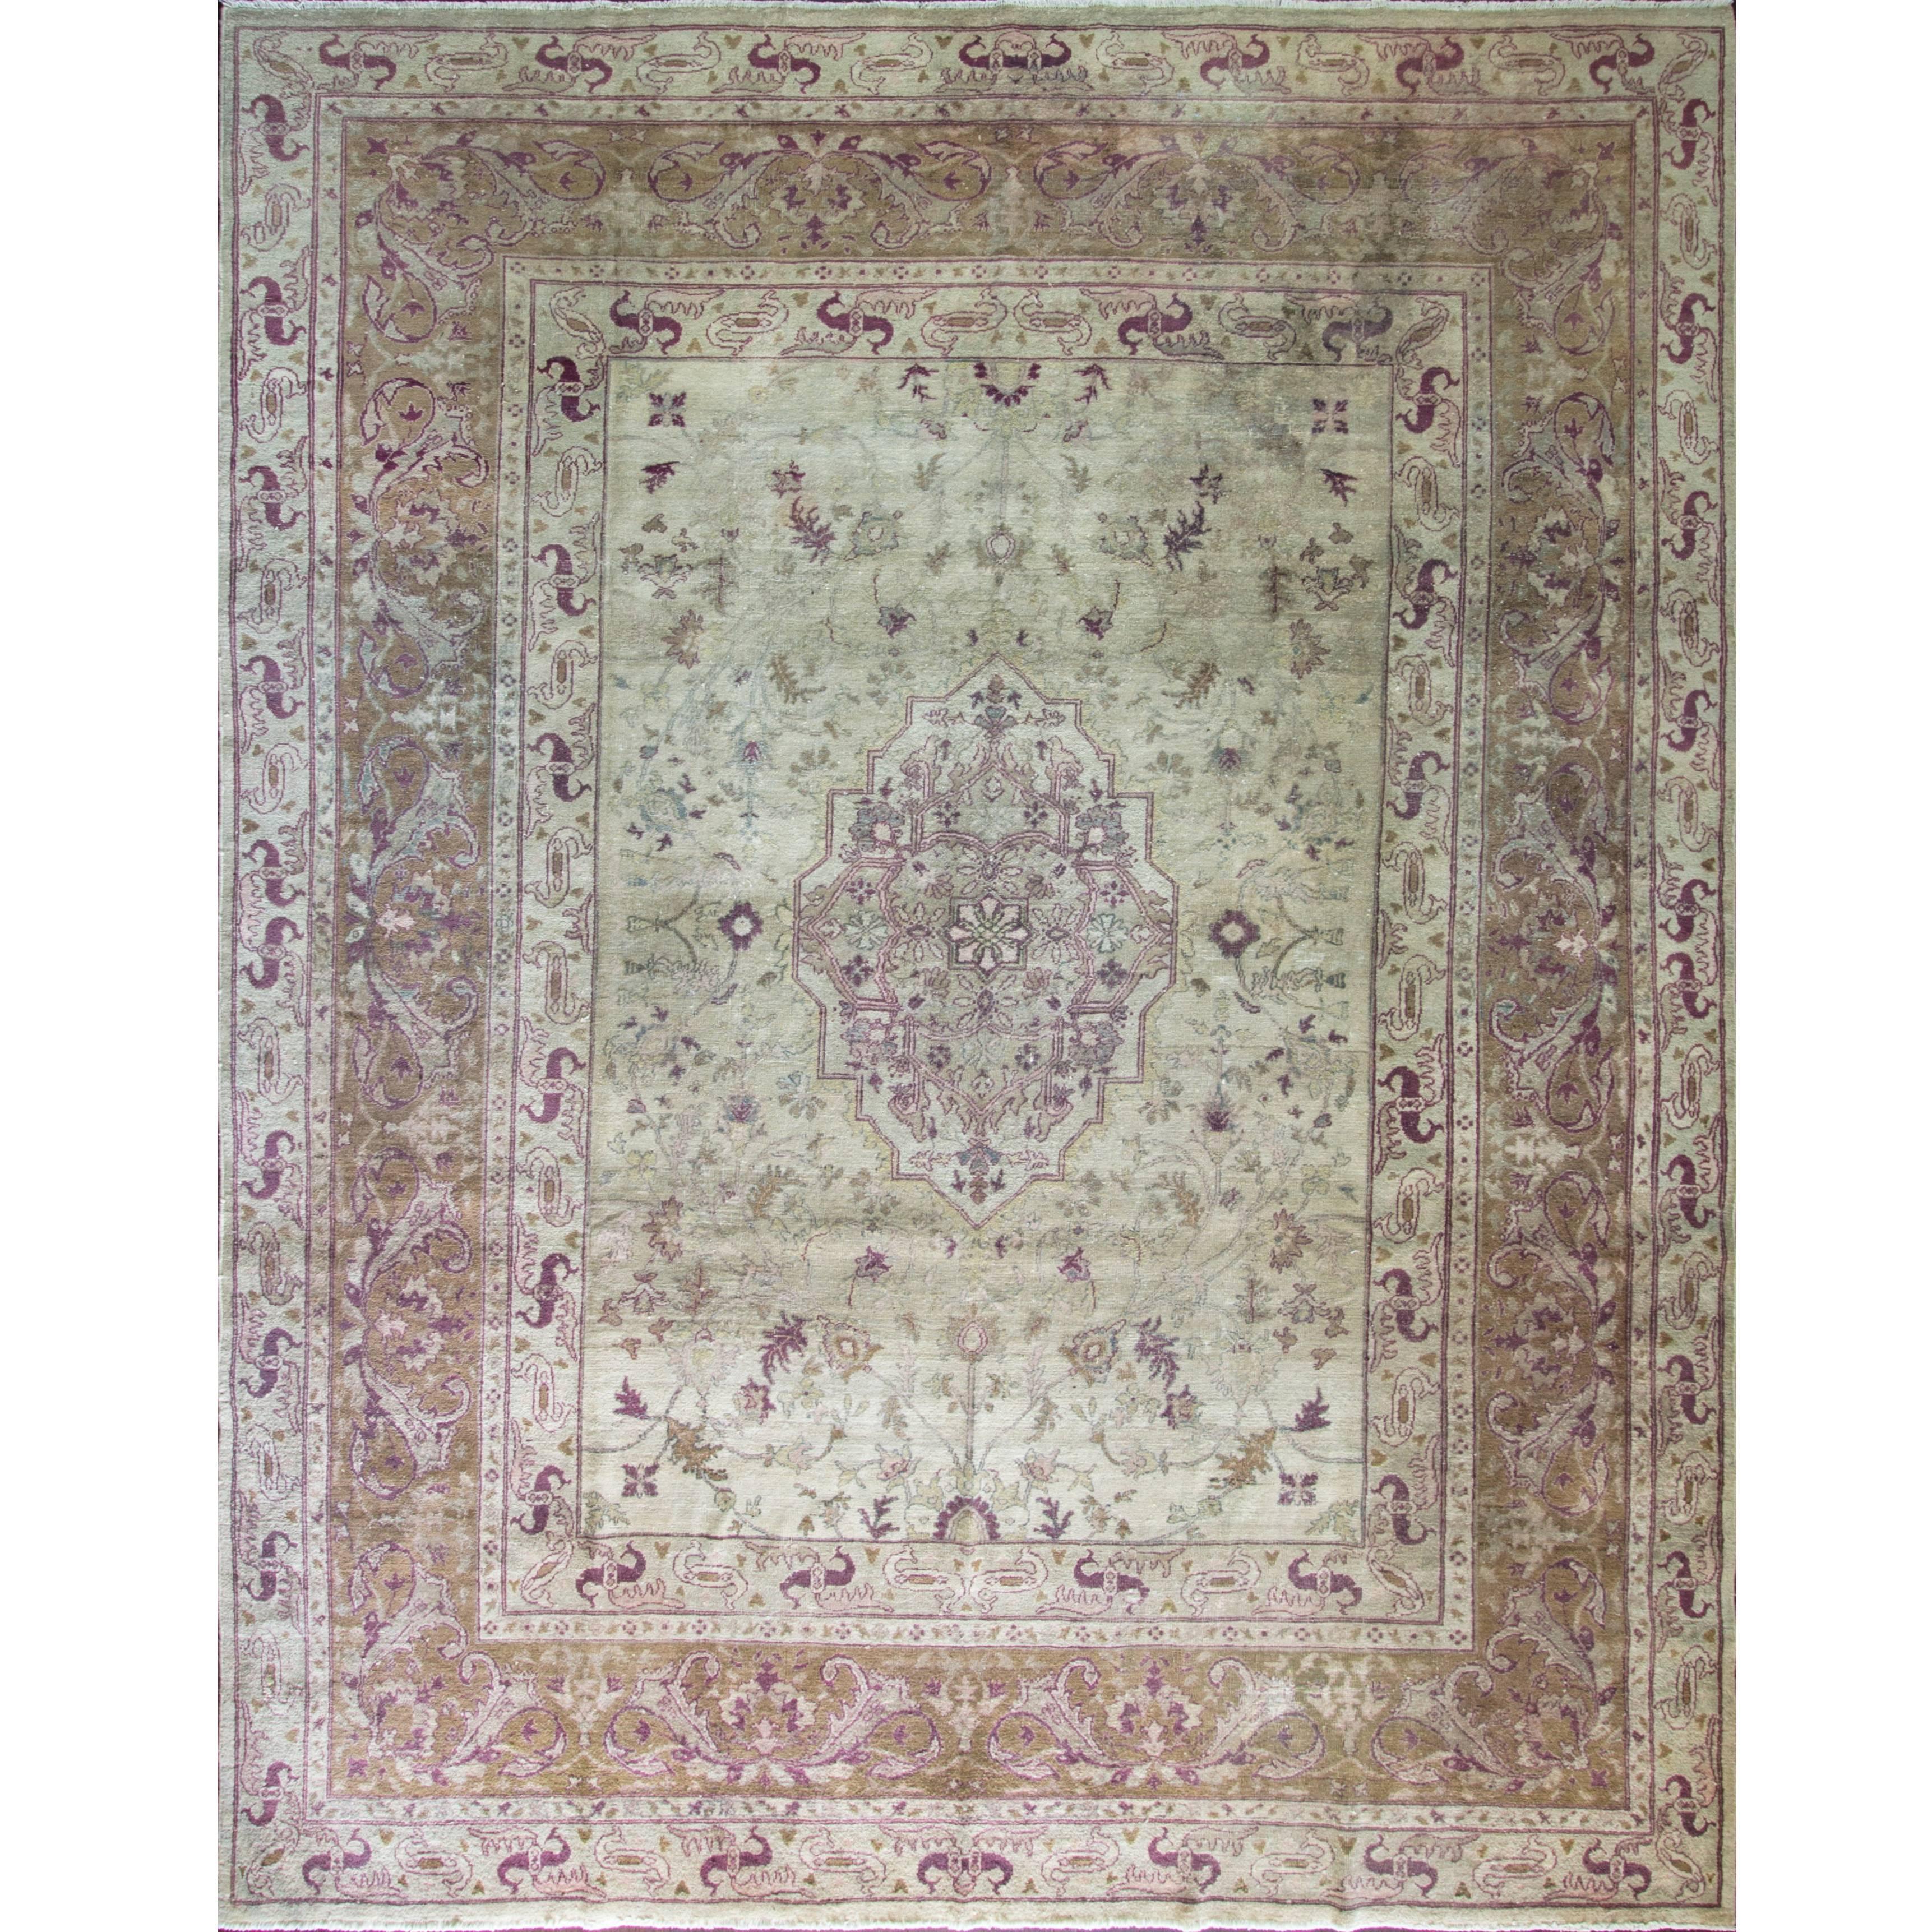 Antique Amritsar/ Agra Carpet, 10' x 13'